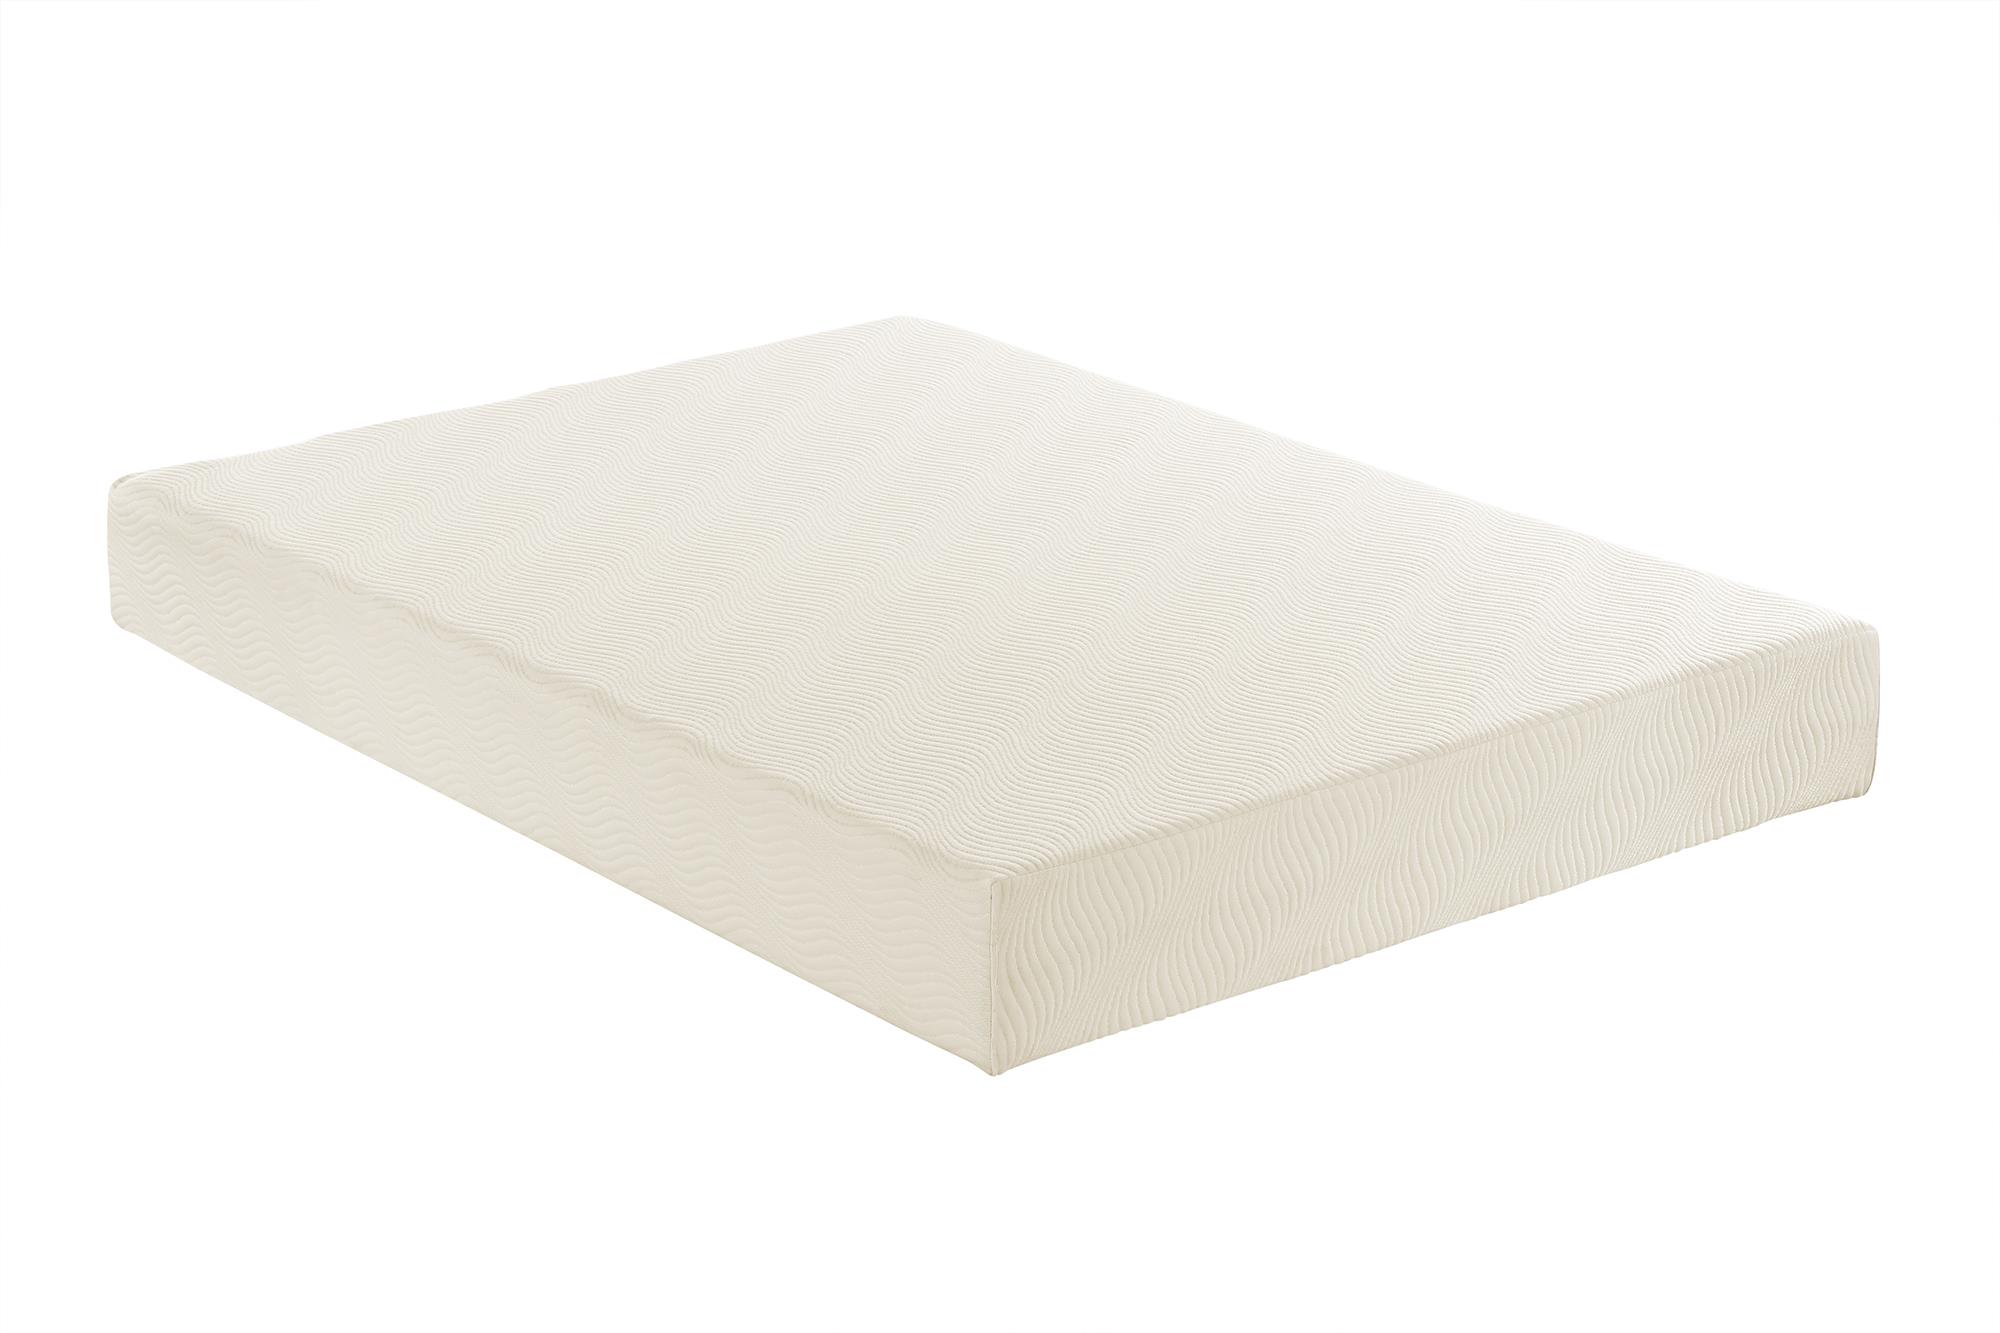 mainstays 2 inch memory foam mattress topper